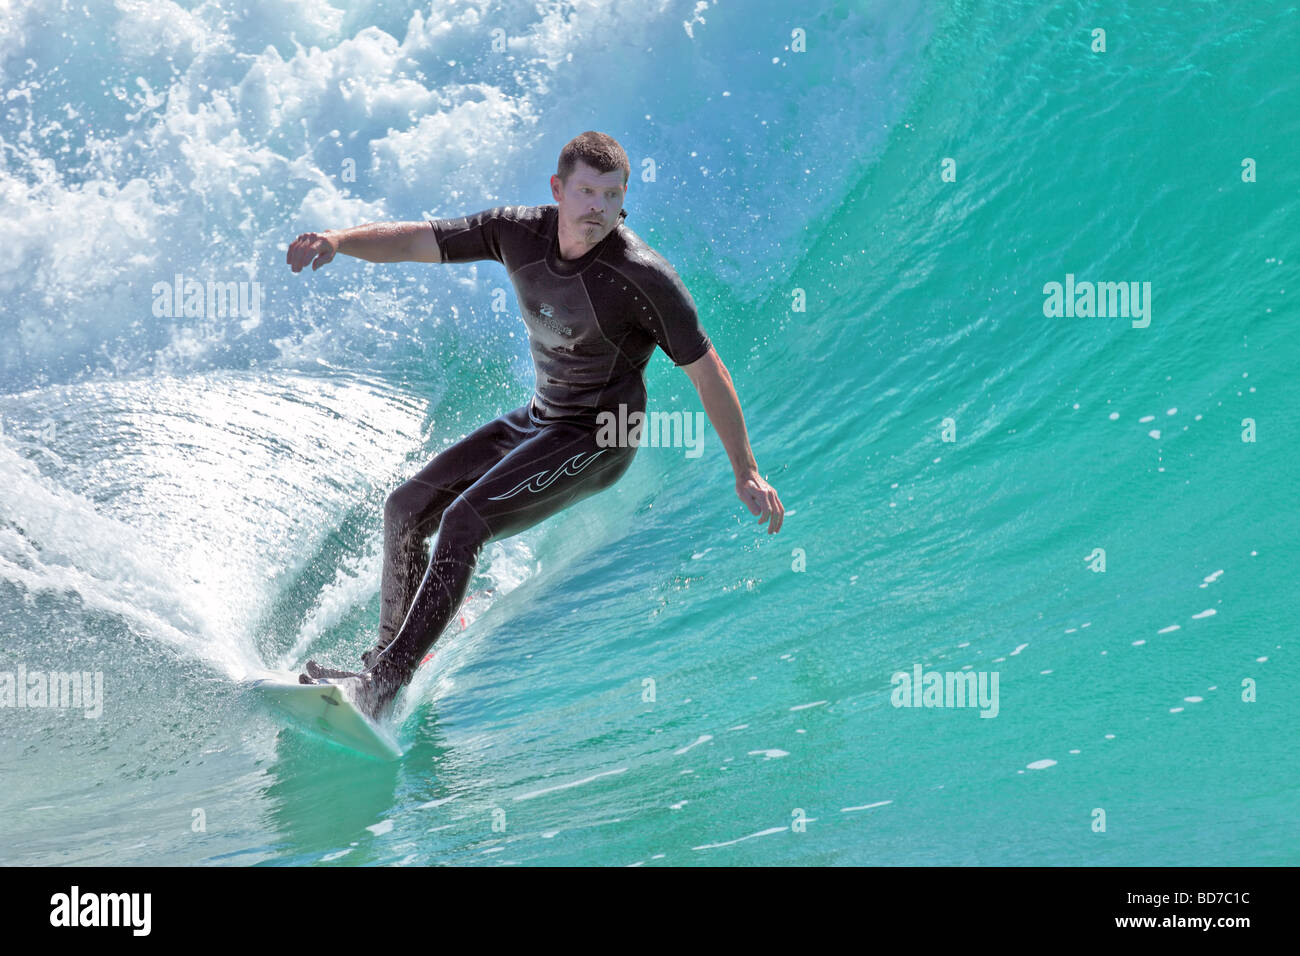 Surfer capta una onda para un paseo a la orilla tarde Foto de stock